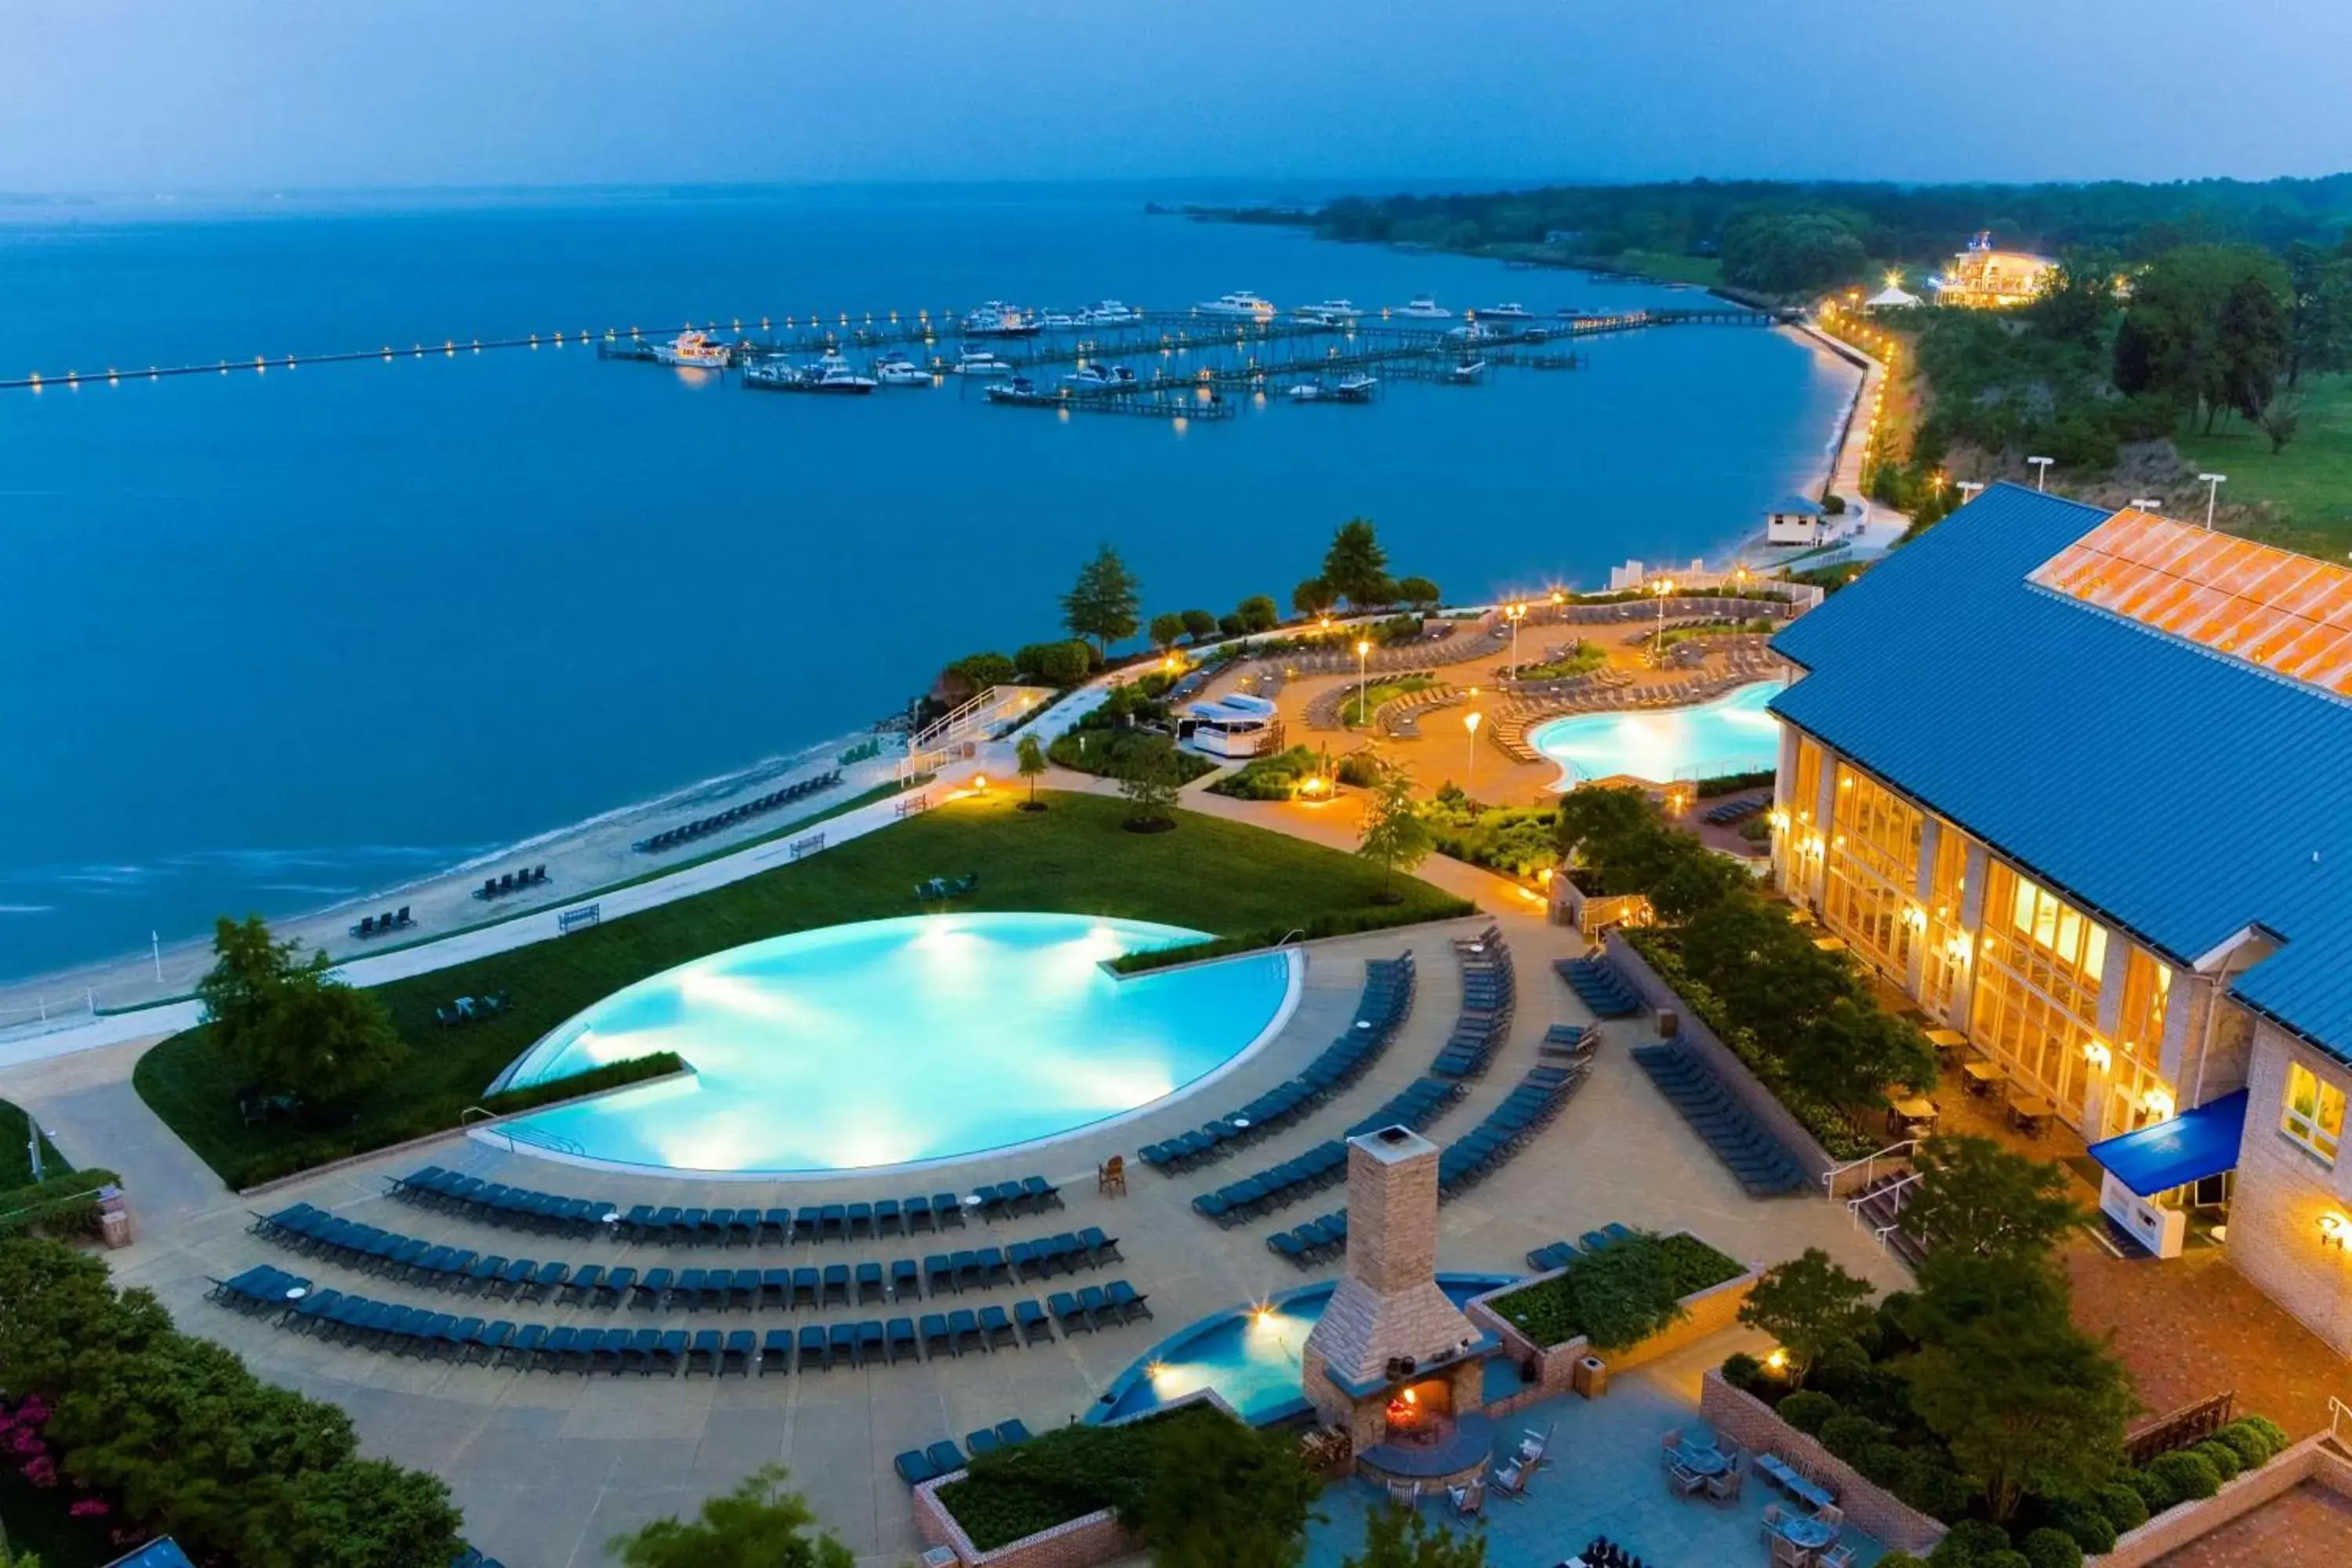 Swimming pool, Bird's-eye View in Hyatt Regency Chesapeake Bay Golf Resort, Spa & Marina